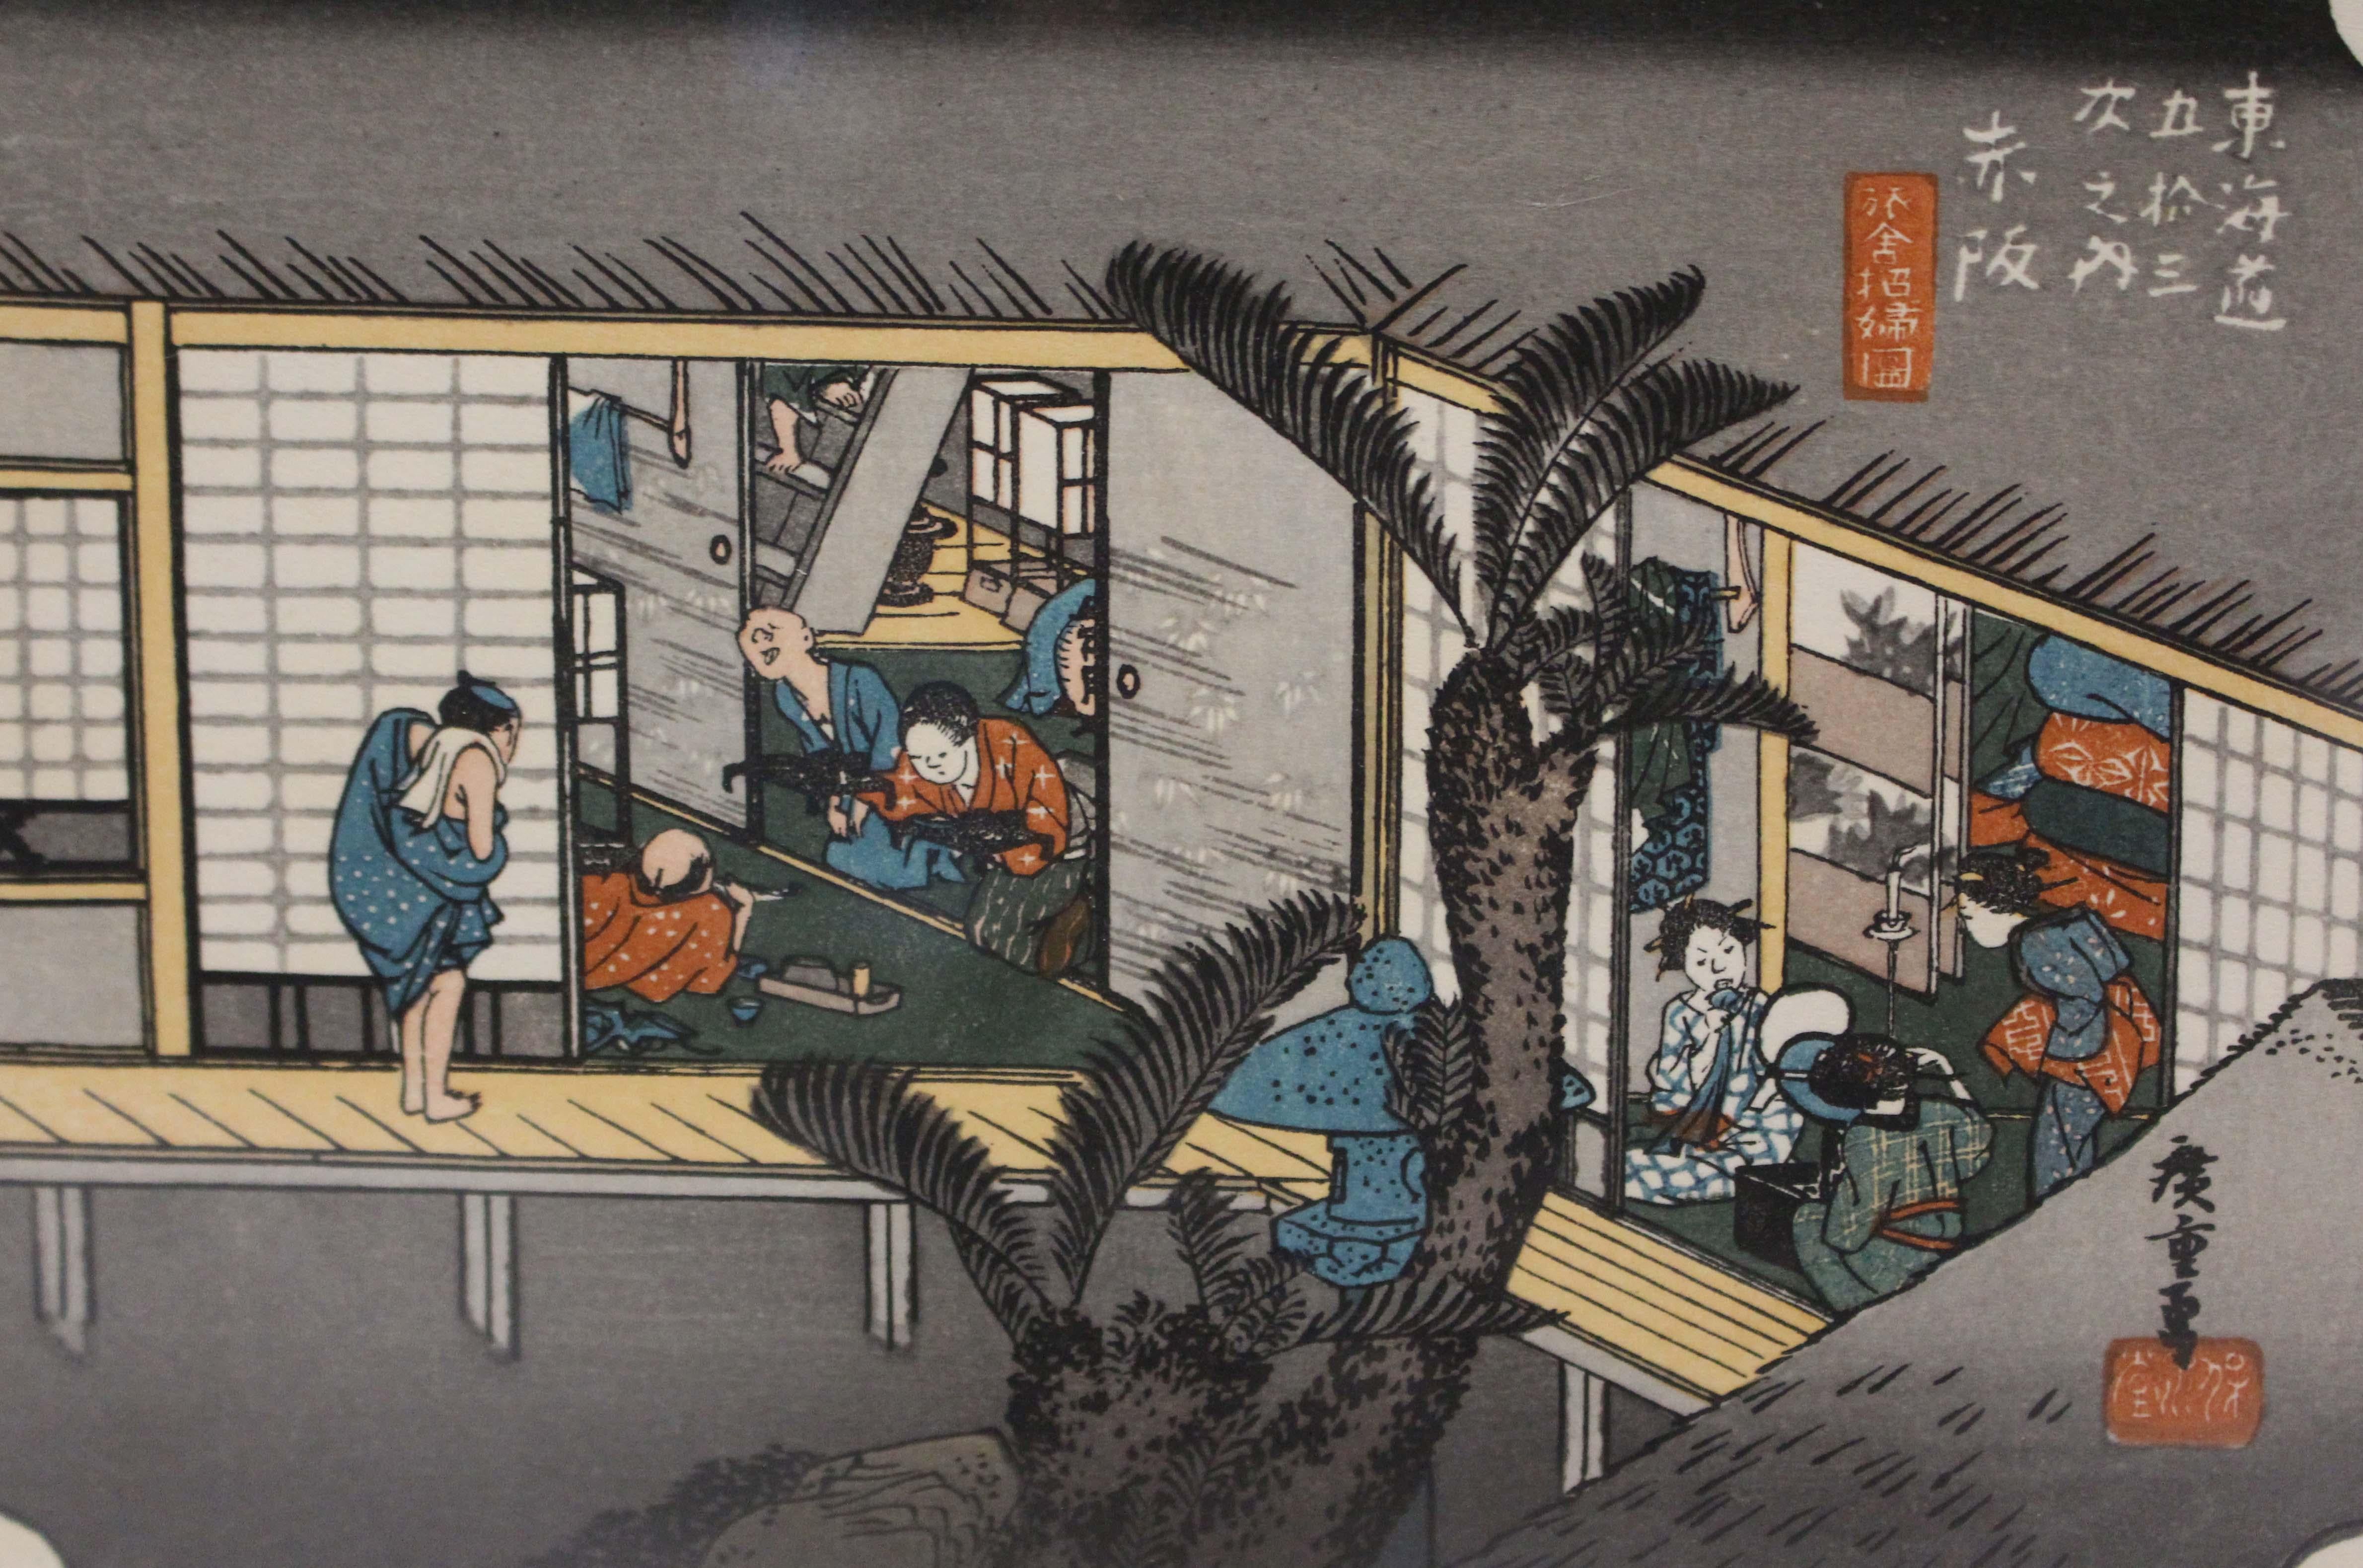 19th century woodblock print after Utagawa Hiroshige, Japanese. 